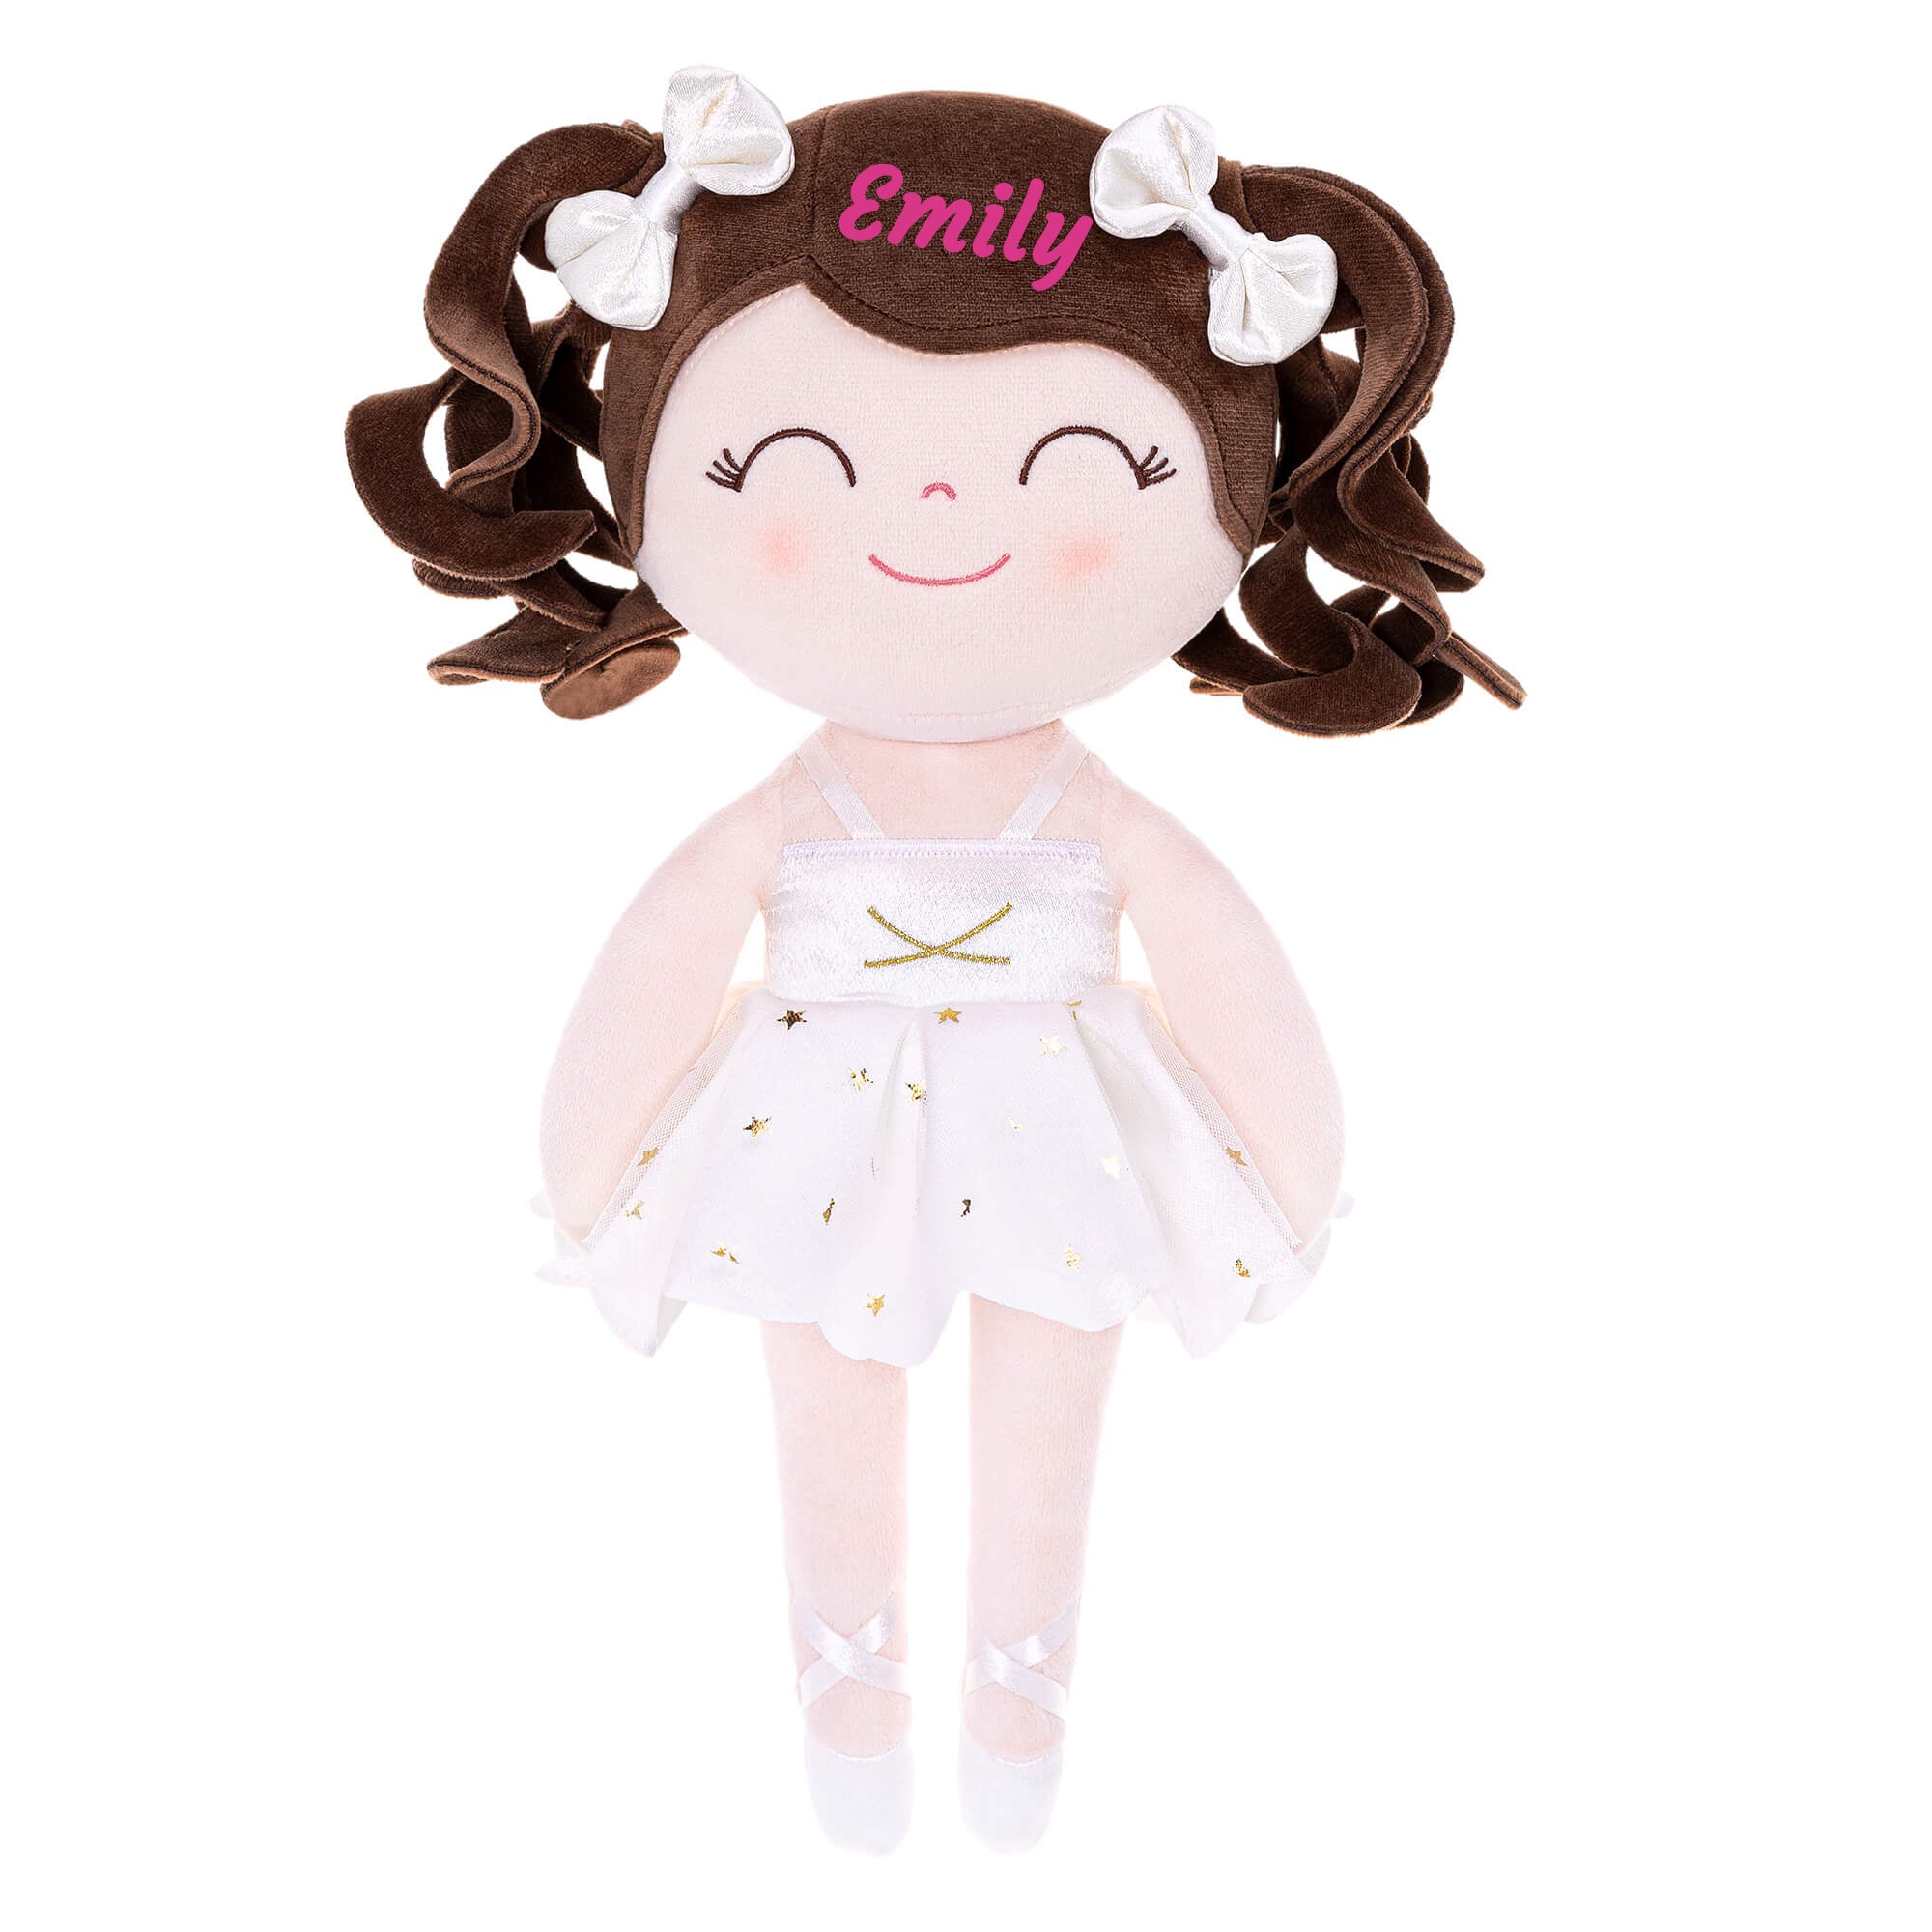 Gloveleya 14-inch Personalized Plush Dolls Curly Ballerina Series White Ballet Dream